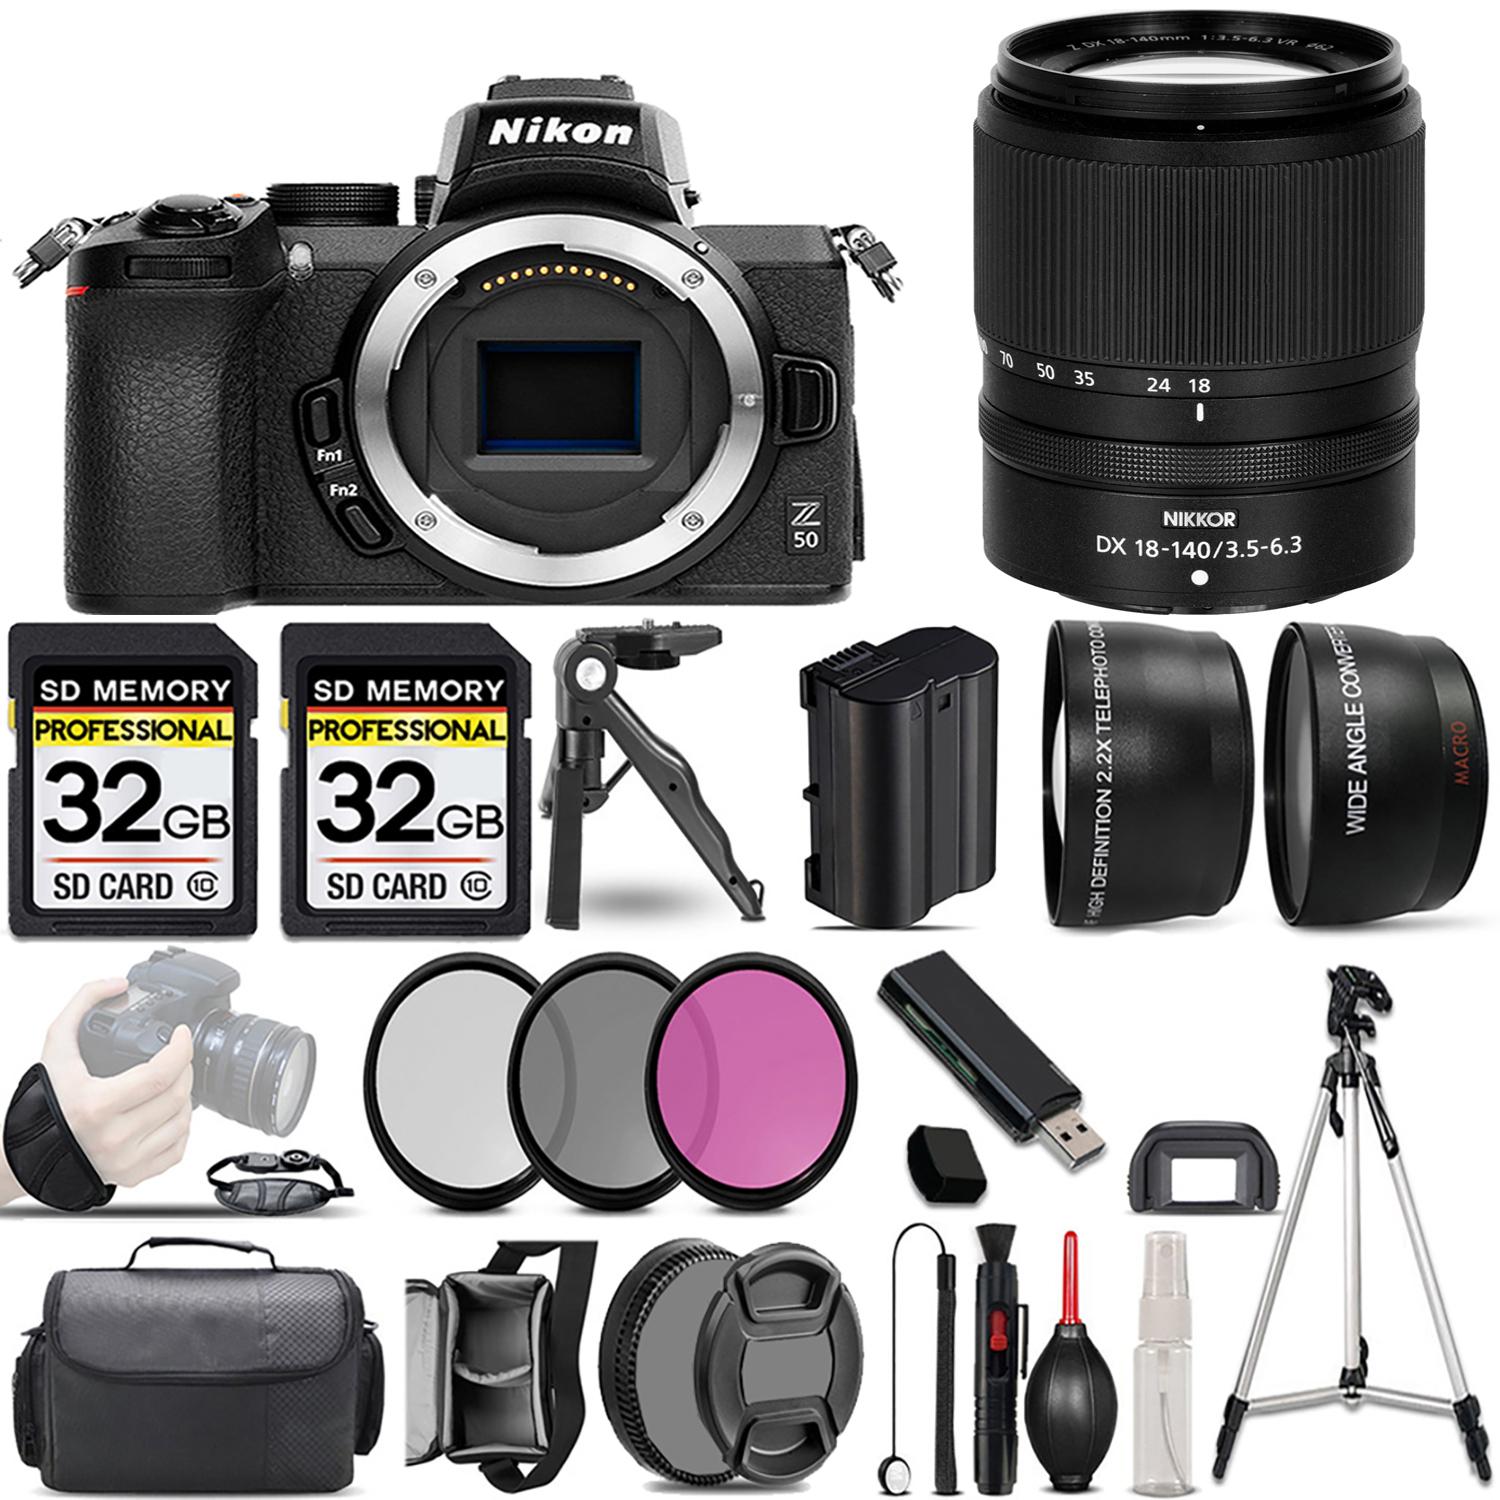 Z50 Mirrorless Camera + 18-140mm f/3.5-6.3 VR Lens + 3 Piece Filter Set + 64GB *FREE SHIPPING*